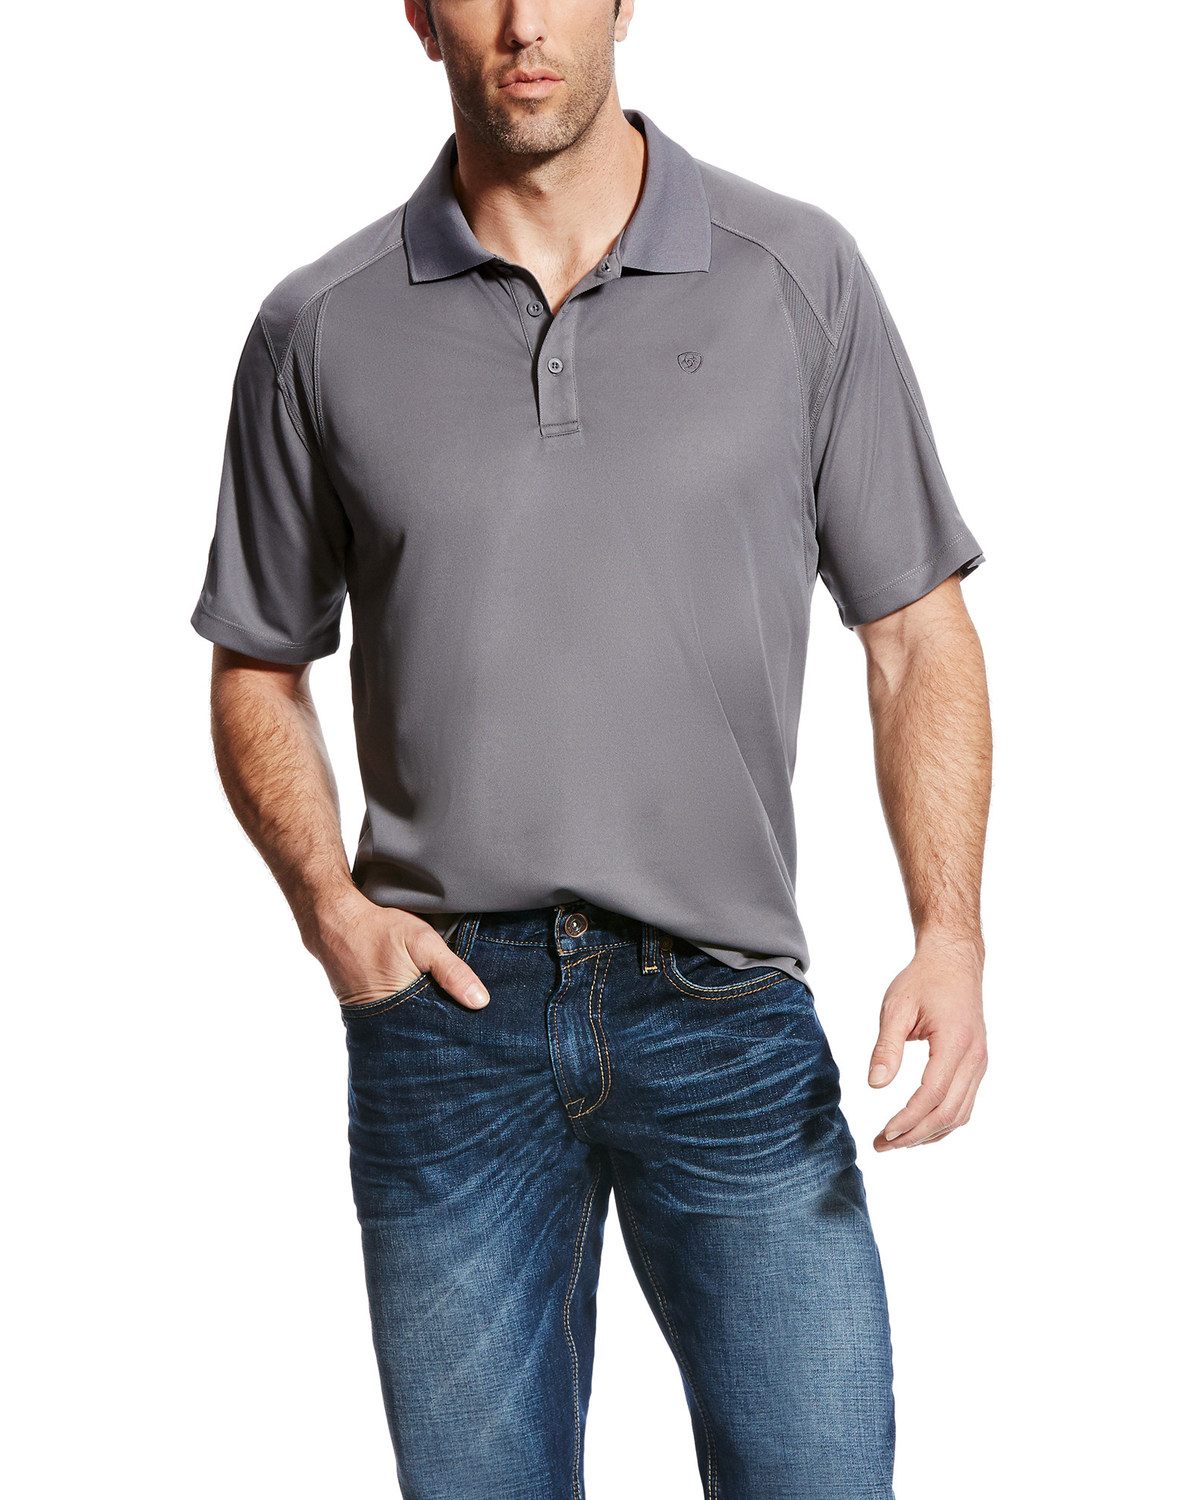 Ariat Men's Grey AC Pique Short Sleeve Polo Shirt - Tall